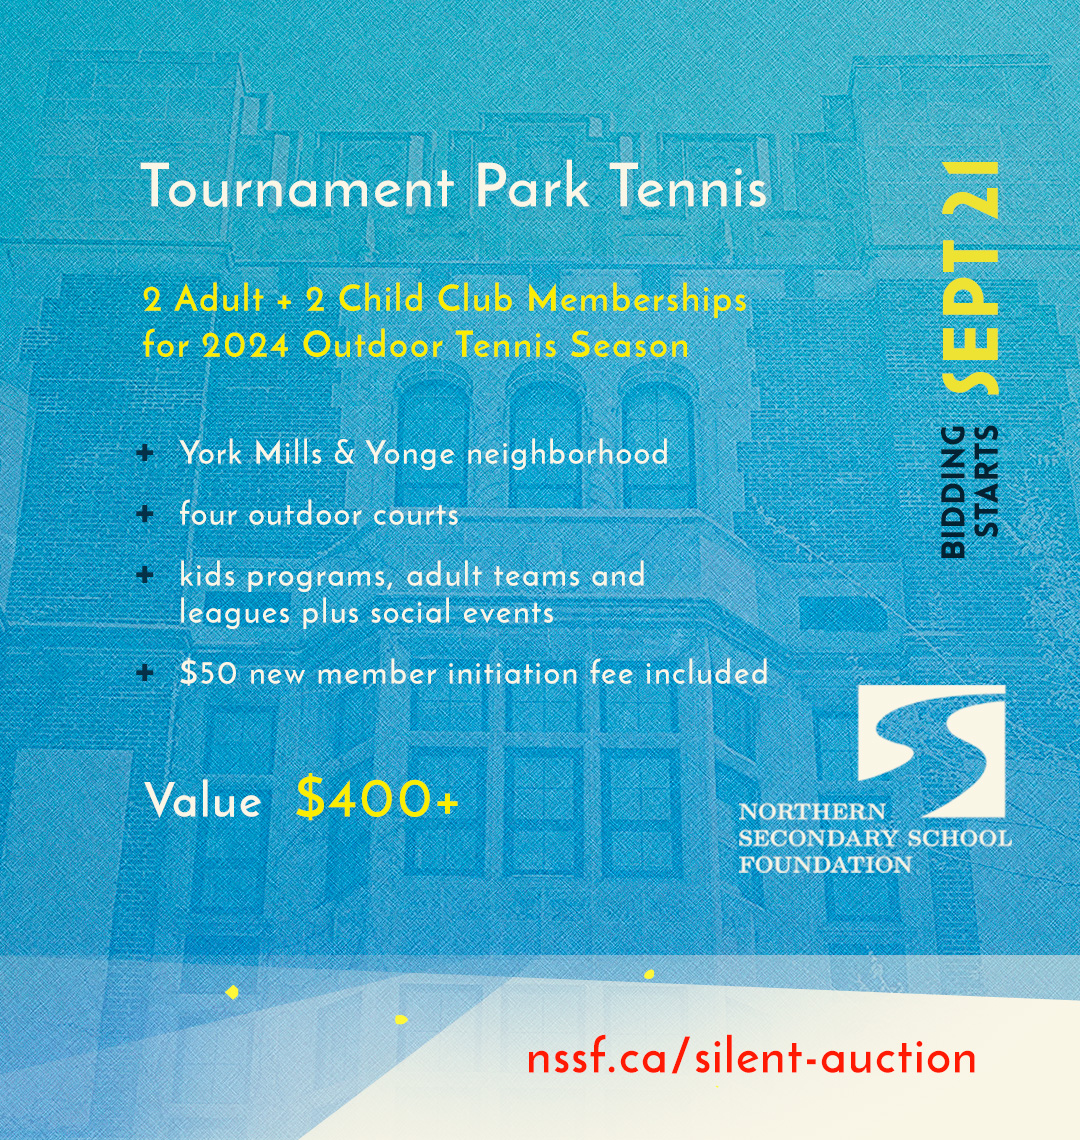 TOURNAMENT PARK TENNIS item info